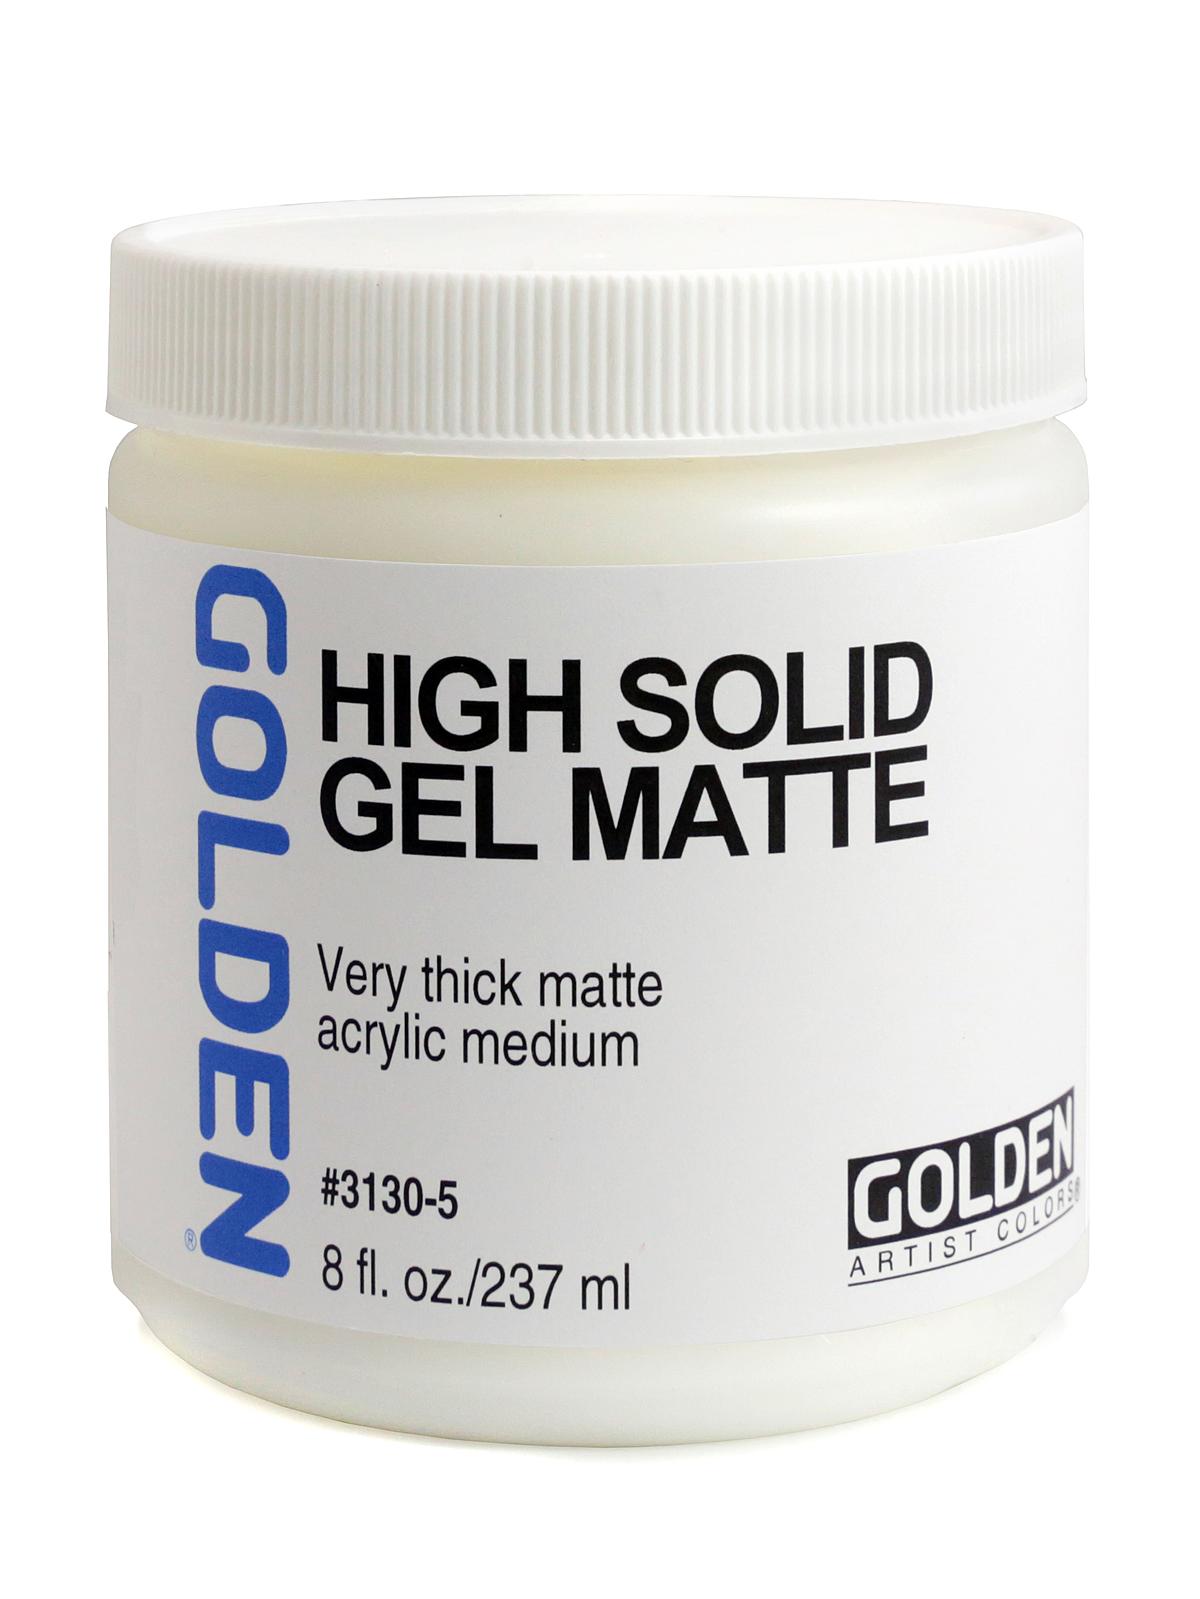 Gel Mediums high solid matte 8 oz.